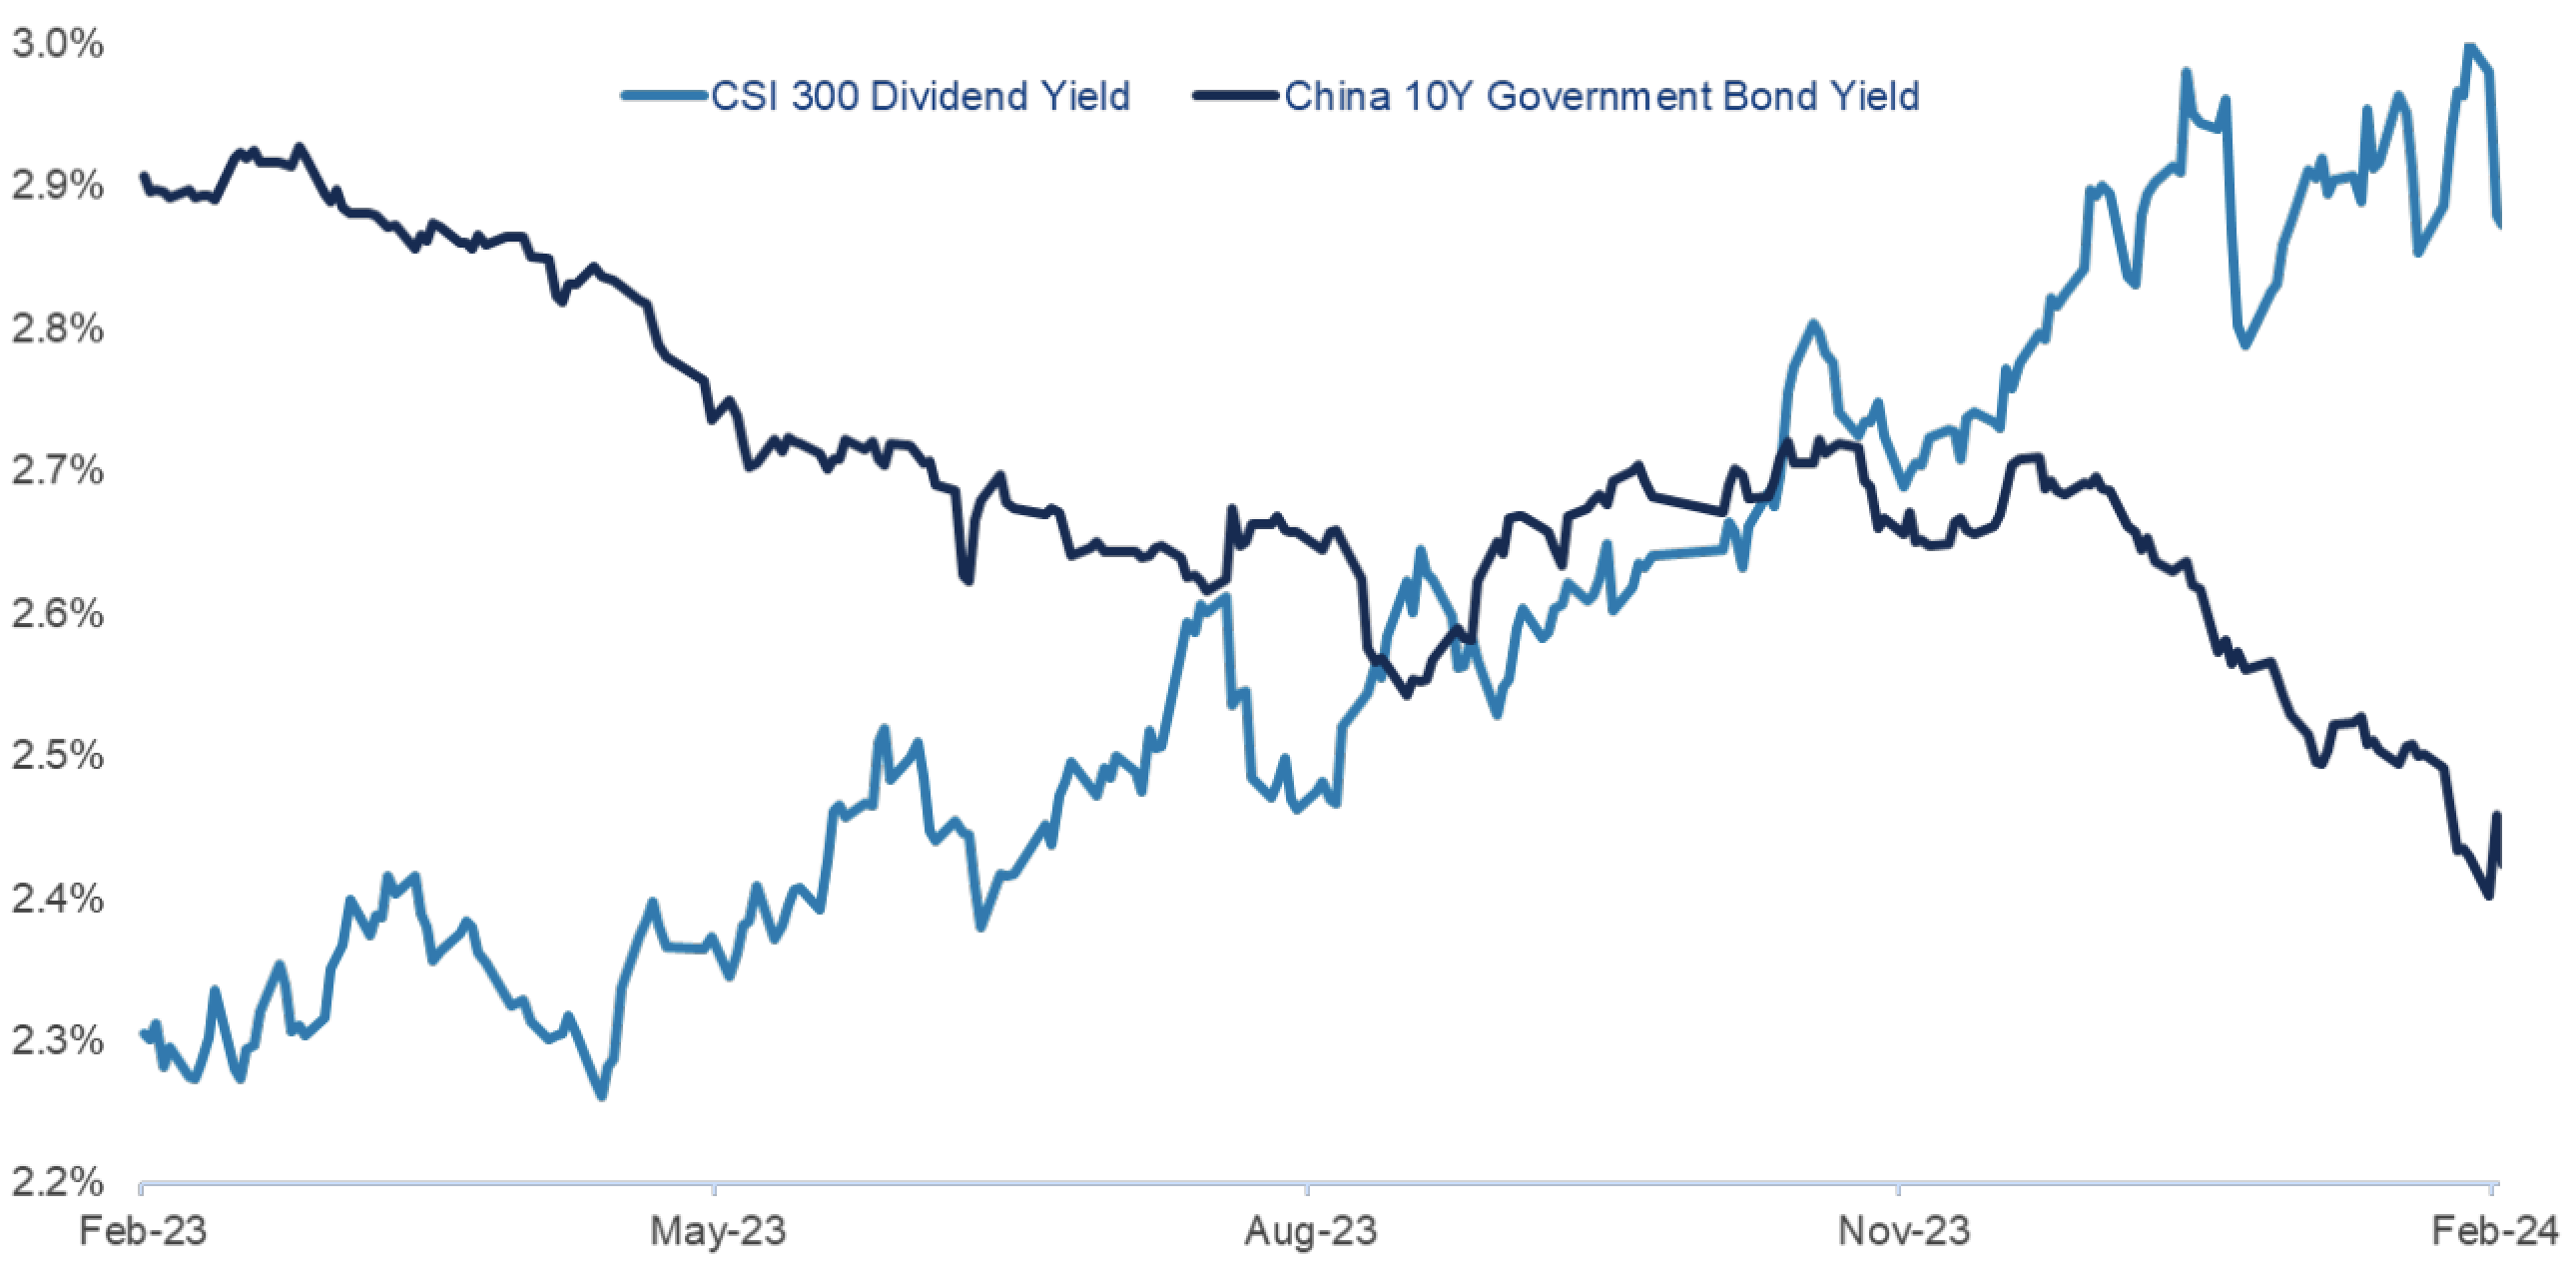 Chart 2: CSI 300 Dividend Yield vs China 10 Year Government Bond Yield